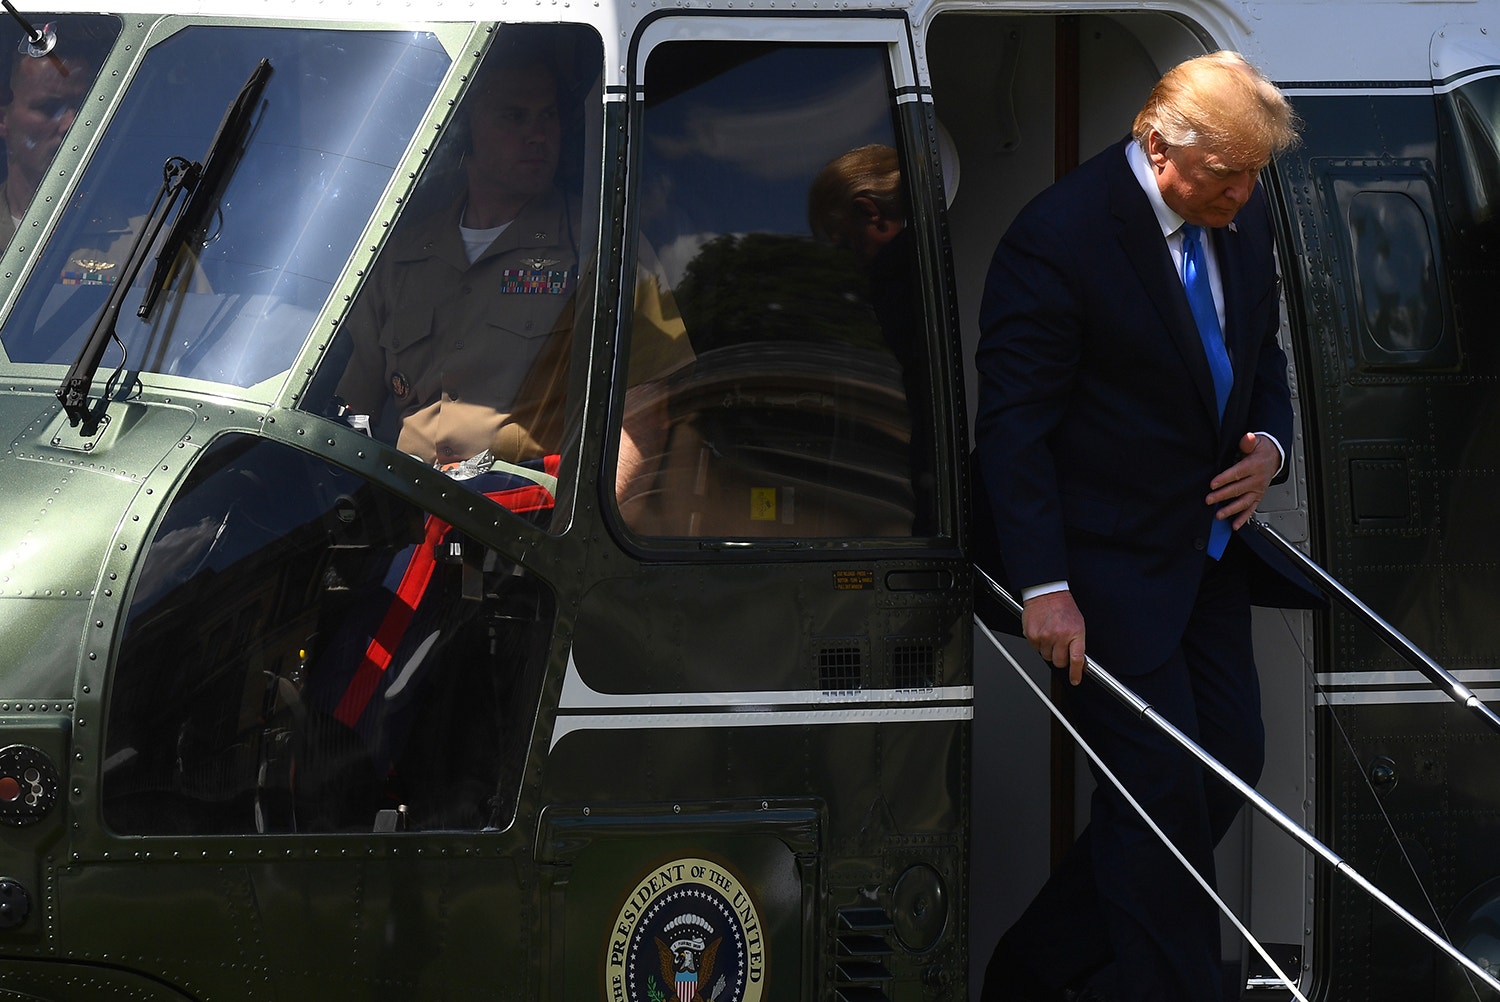  Donald Trump e a primeira dama Melania, foram transportados de helic&oacute;ptero para o Pal&aacute;cio de Buckingham /Kevin Coombs - Reuters 